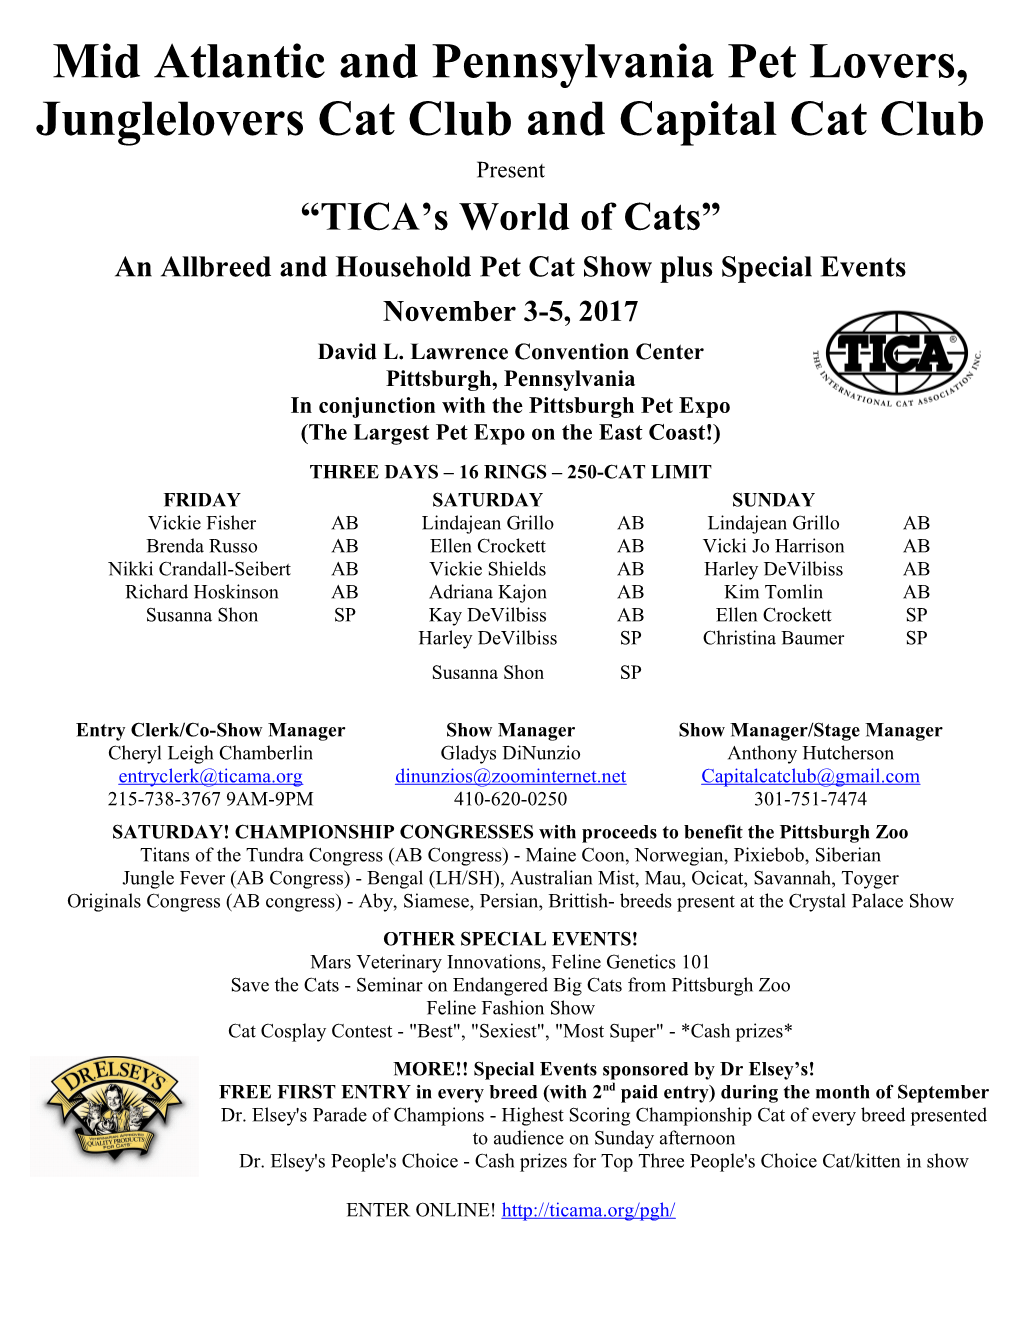 Mid Atlantic and Pennsylvania Pet Lovers, Junglelovers Cat Club and Capital Cat Club